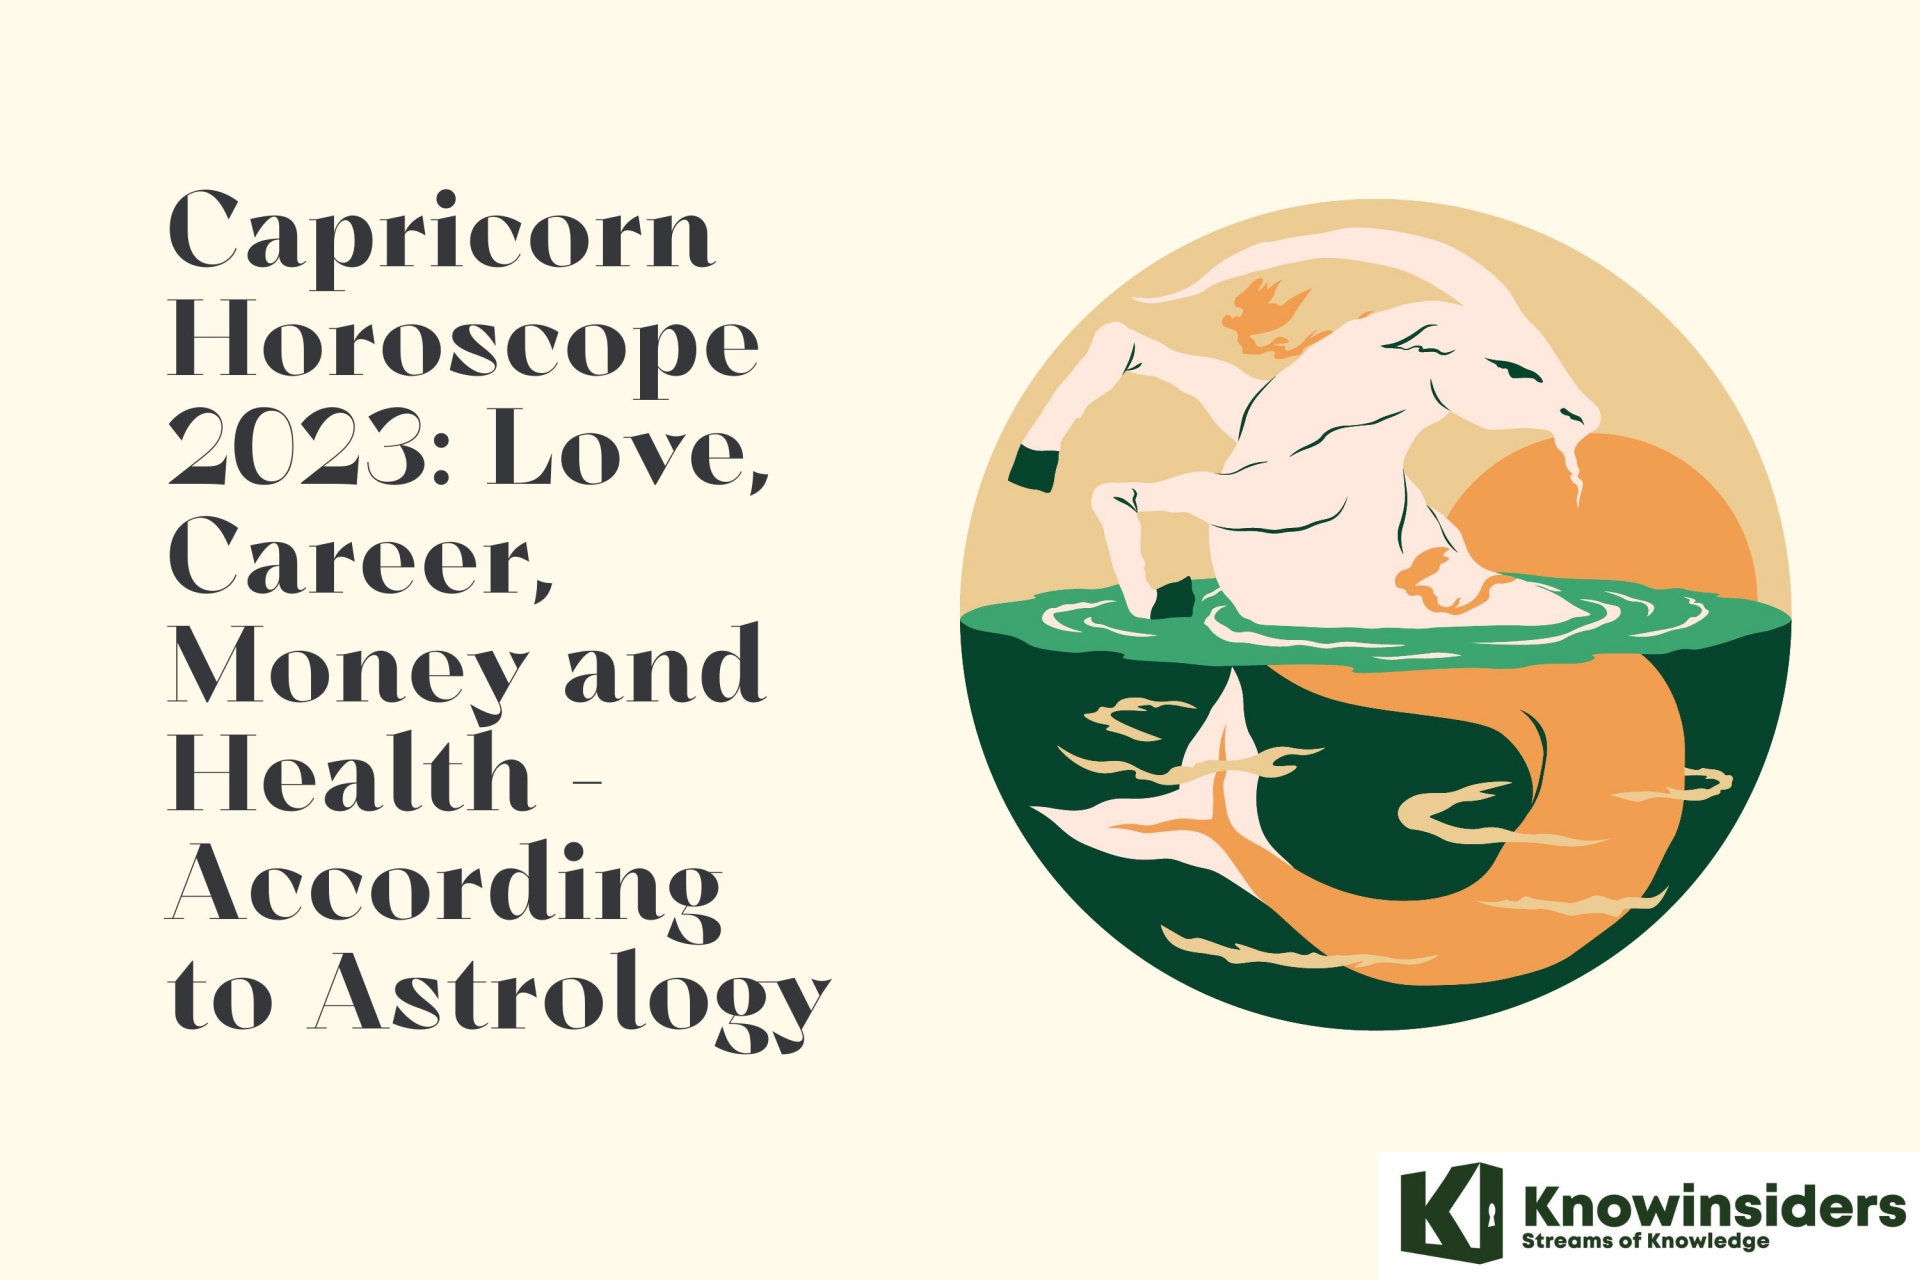 Capricorn Horoscope 2023 Love, Career, Money and Health According to